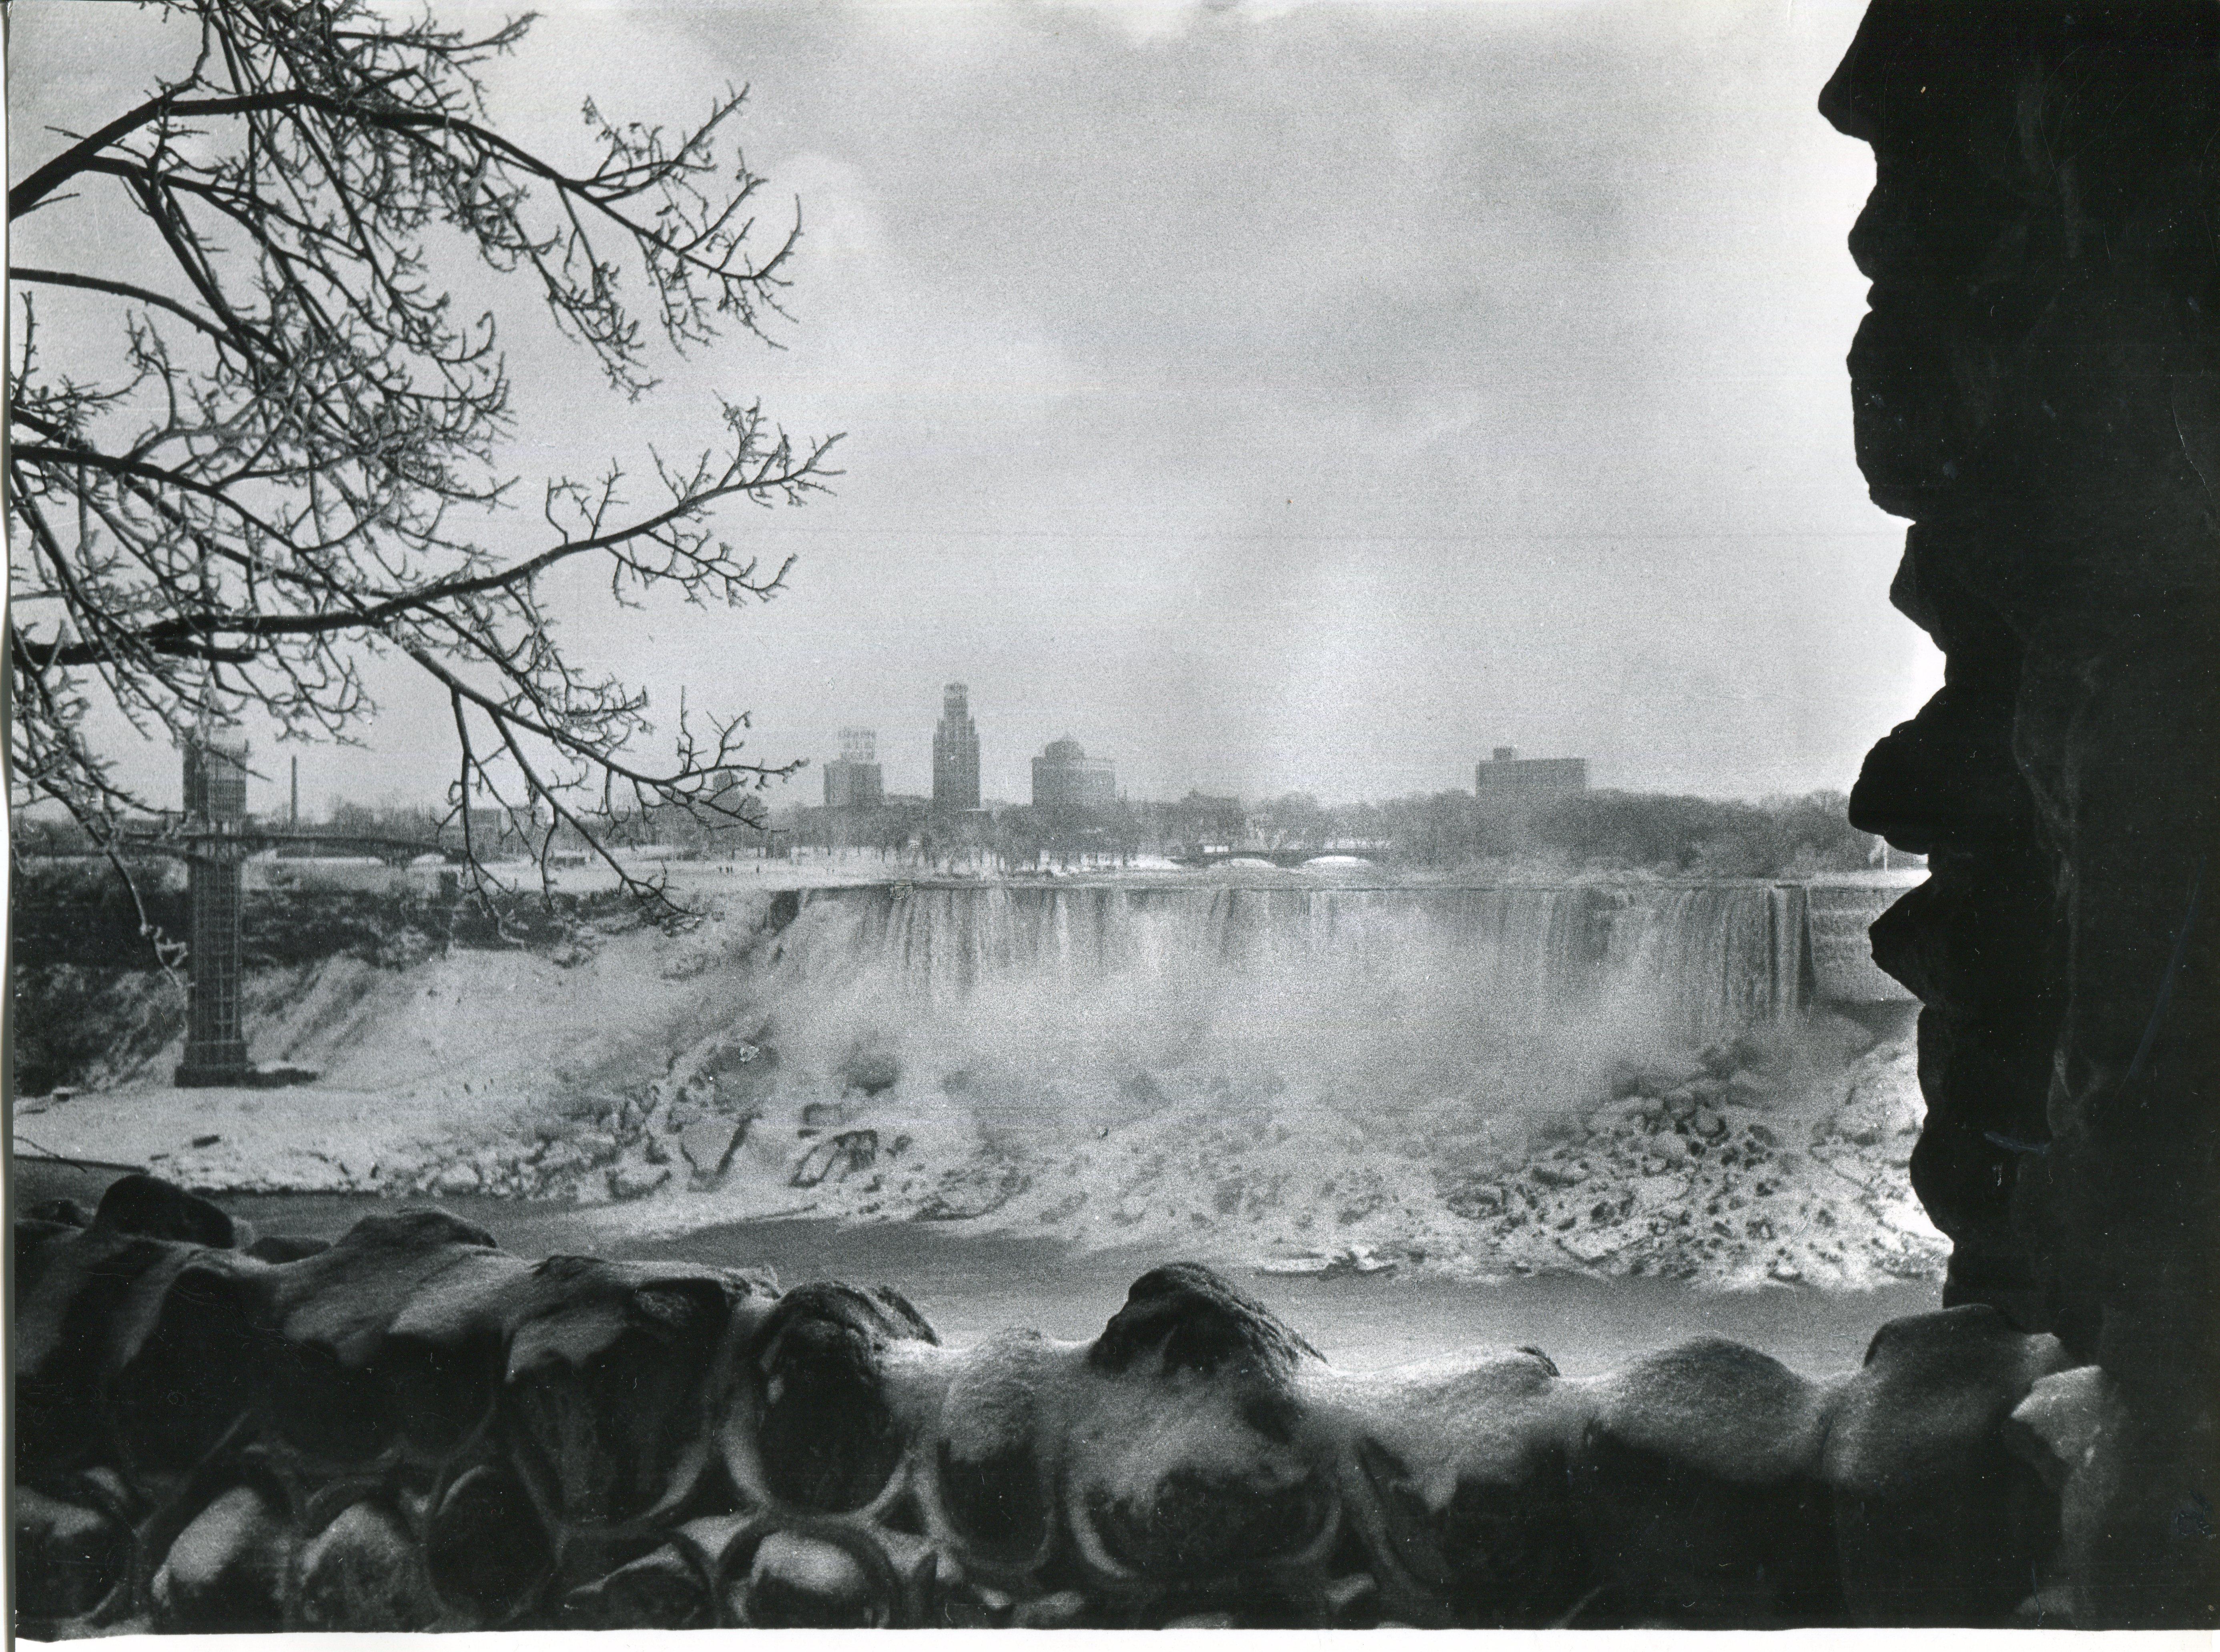 Niagara Falls, USA, 1965 - Photograph by Erich Andres